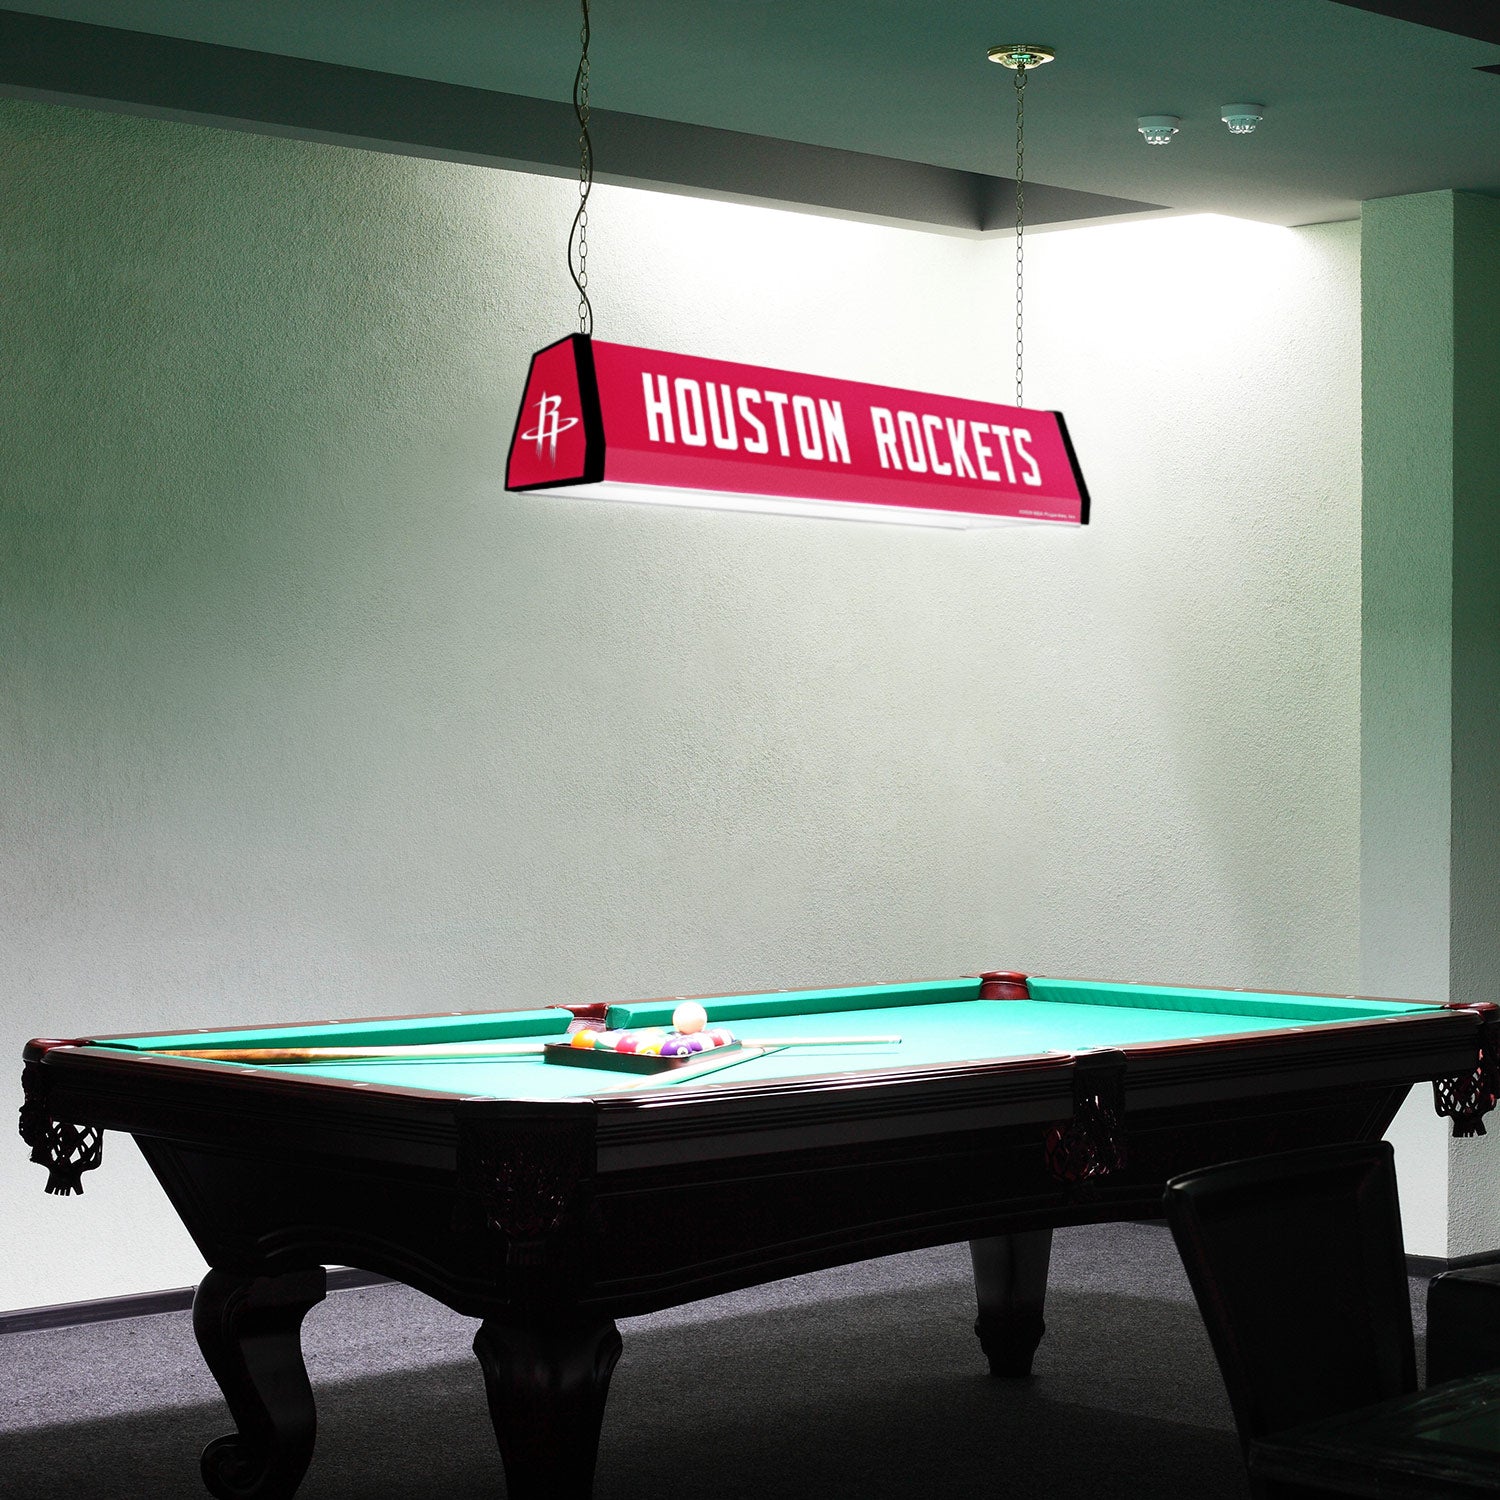 Houston Rockets Standard Pool Table Light Room View